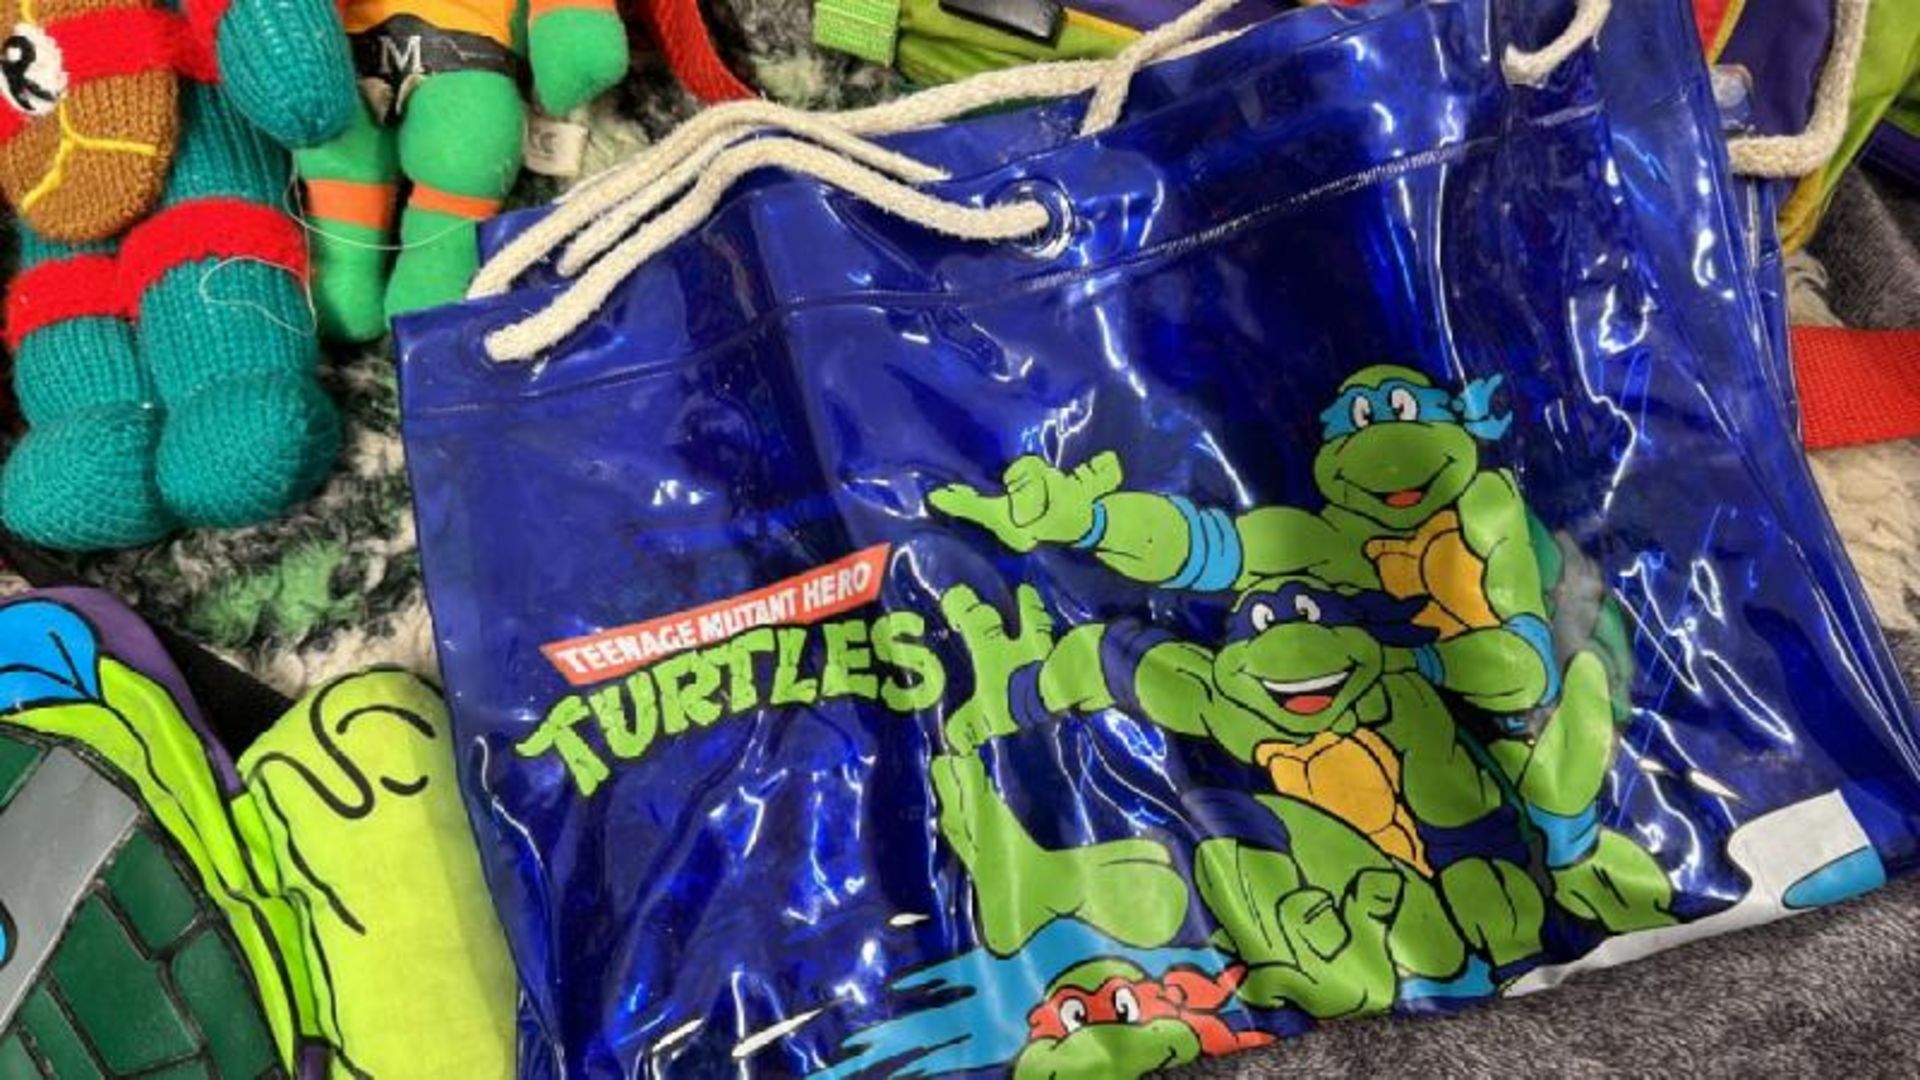 Teenage Mutant Hero Turtles soft toys, rug, rucksacks, bags and hot water bottles / AN41 - Image 5 of 8